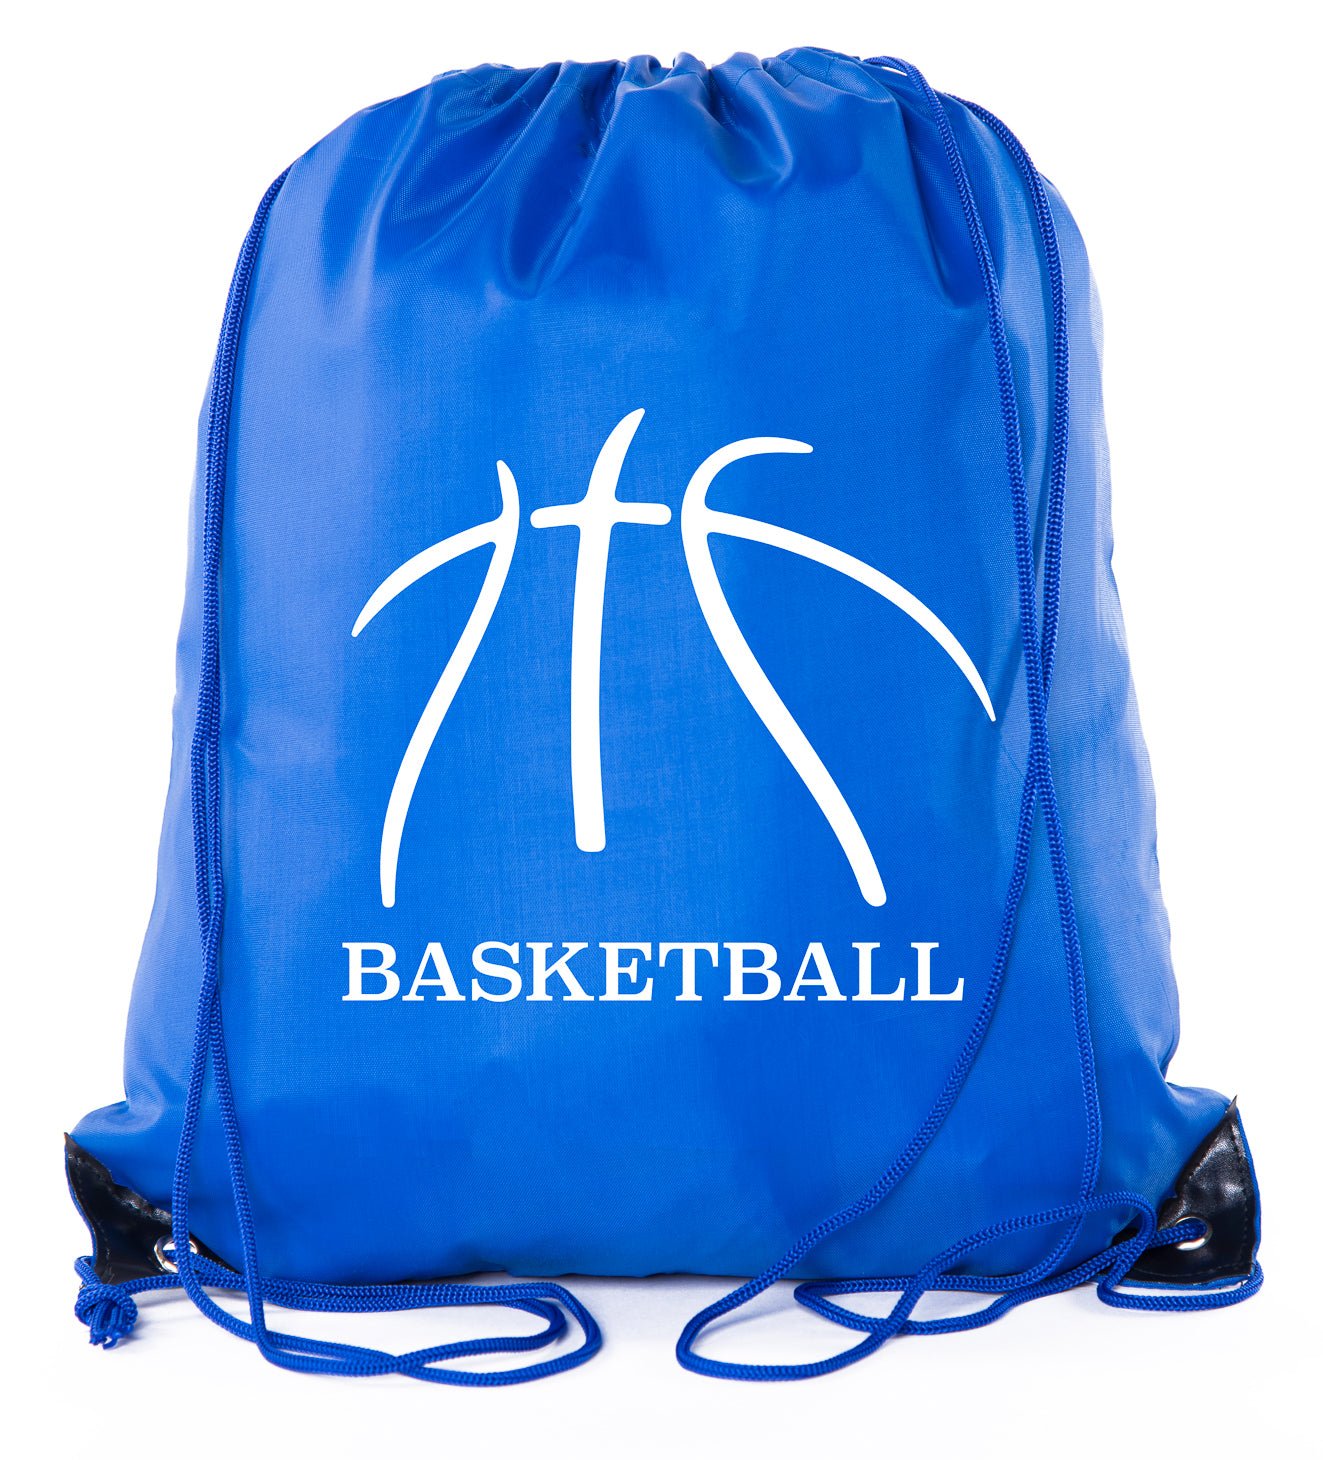 Basketball Cool Dude String Bag